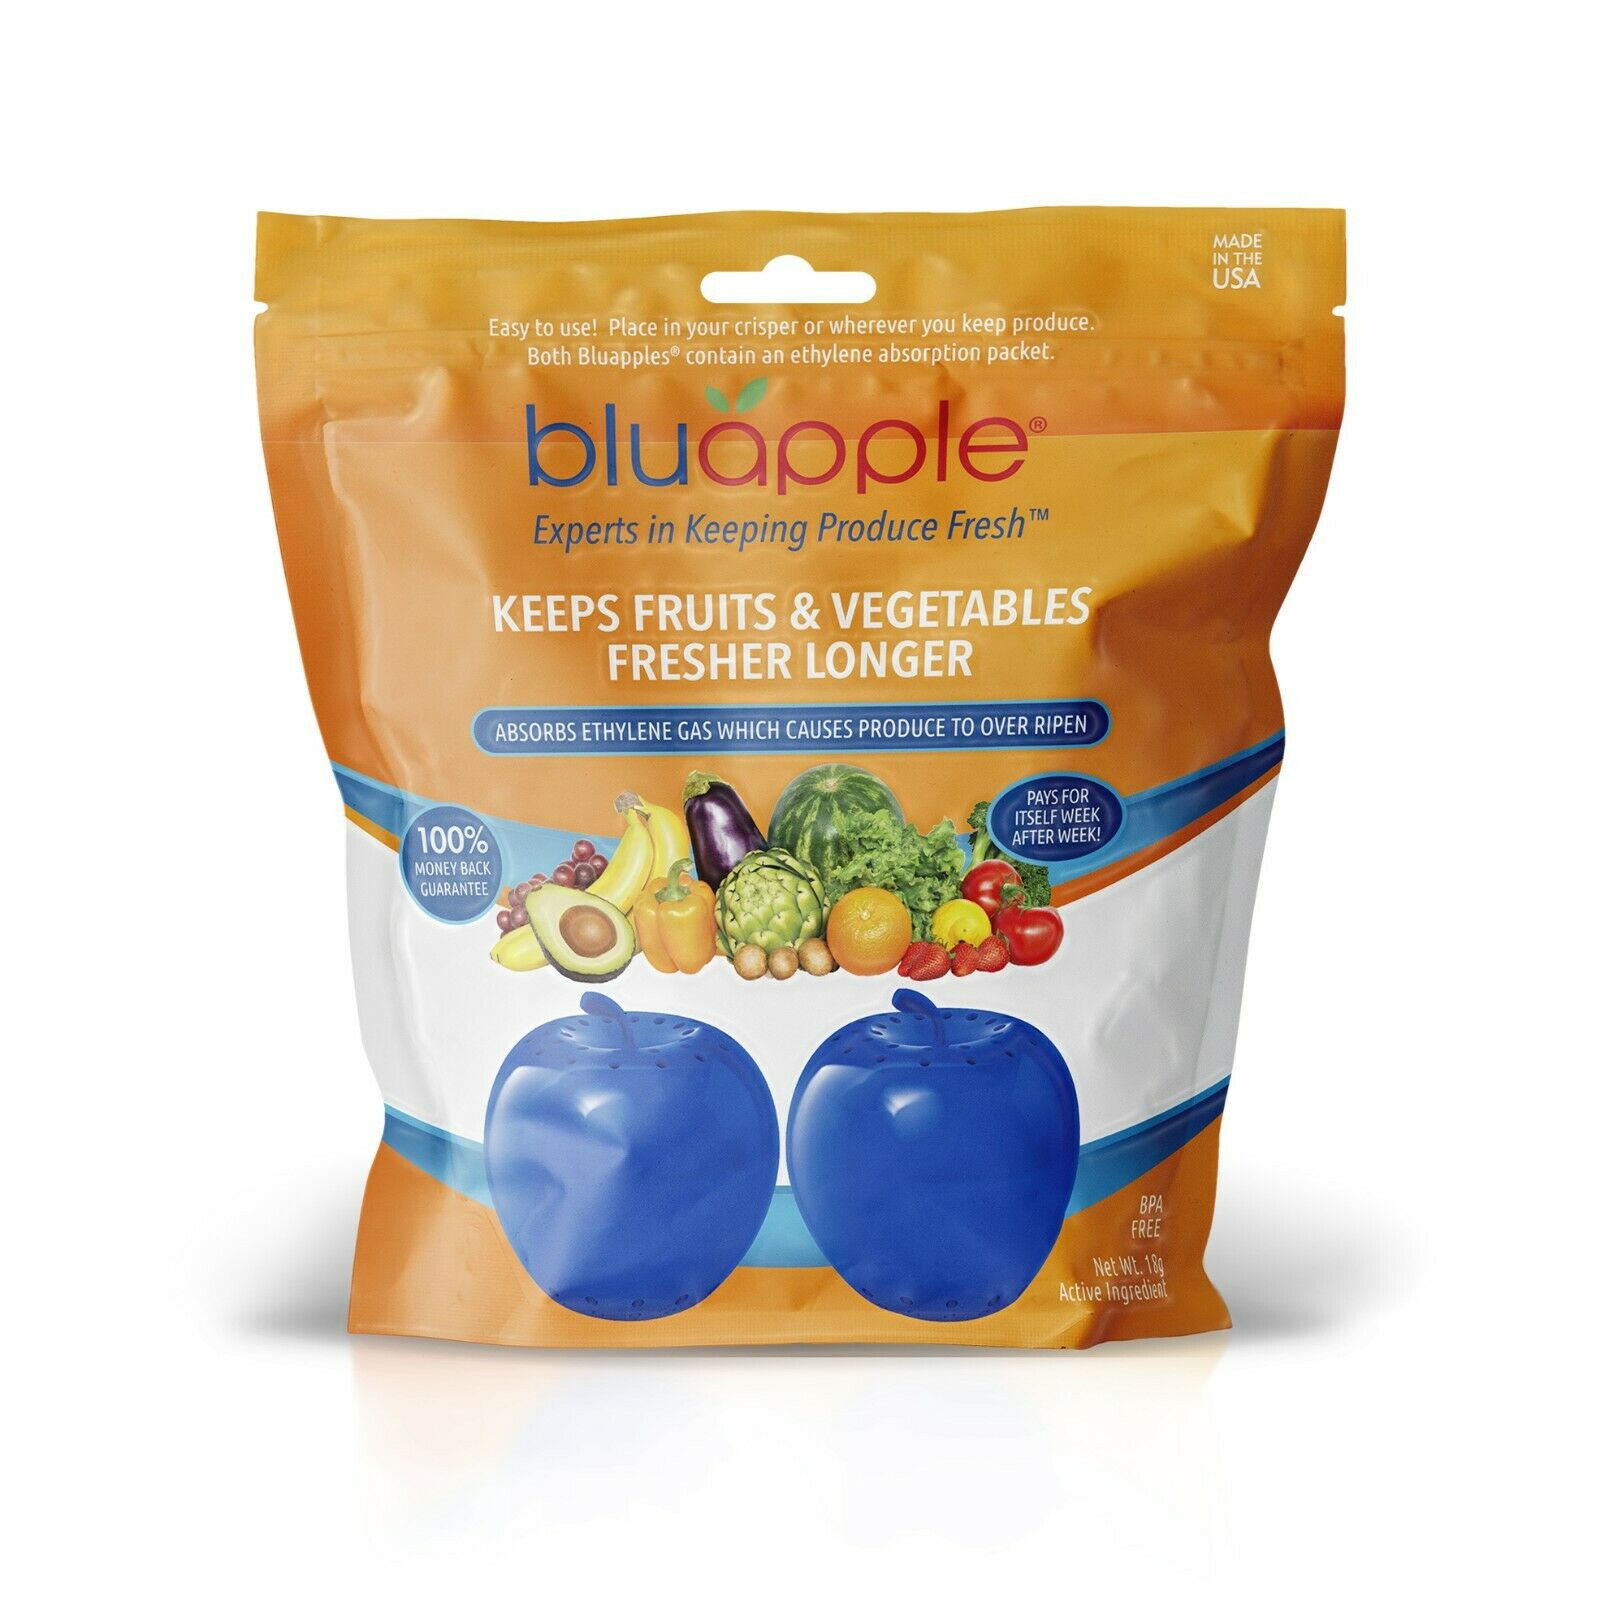 Bluapple Freshness Balls Keeps Produce Fresh Longer - Reusable!